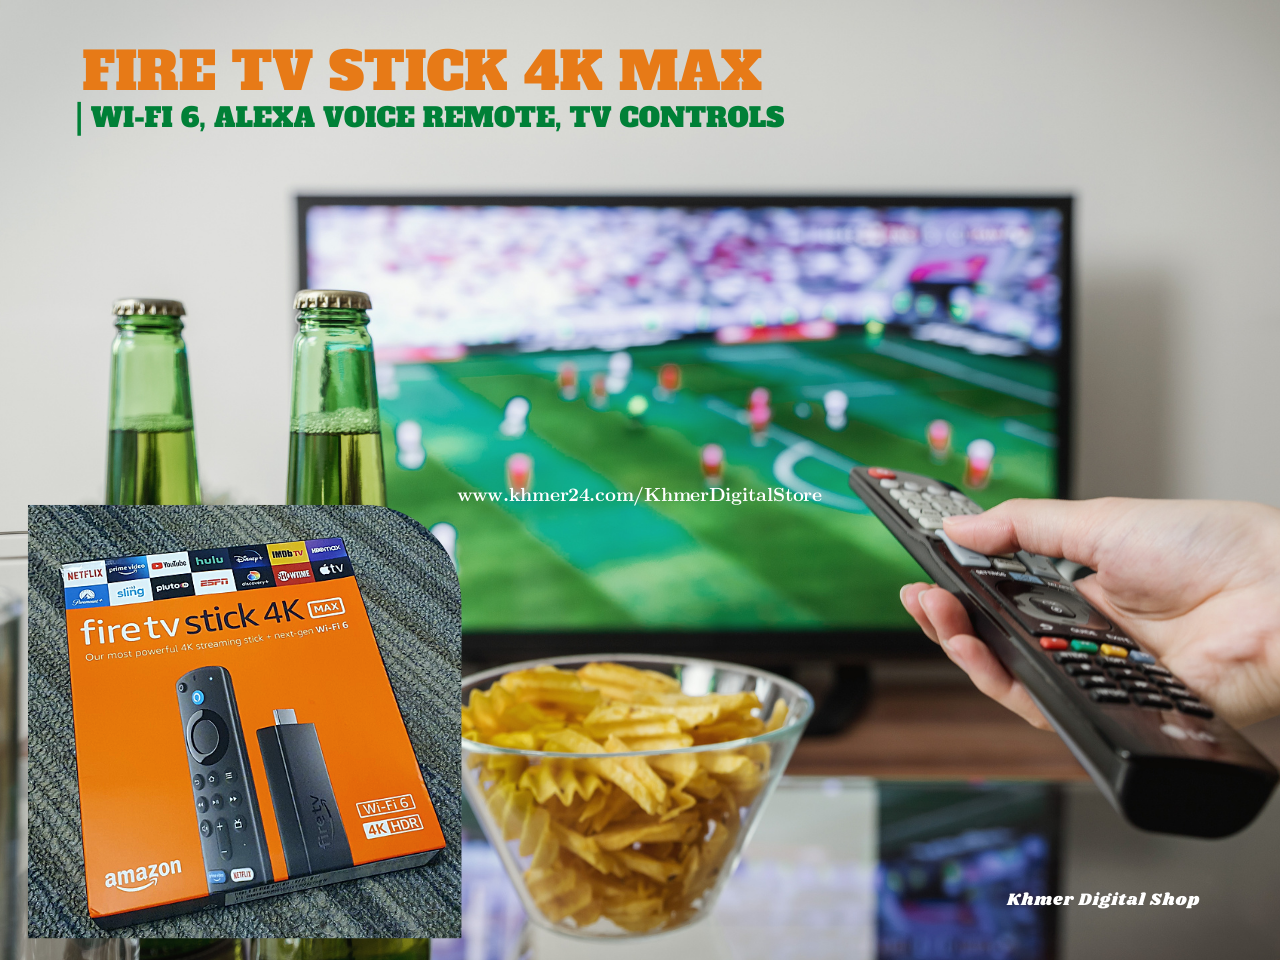 Introducing Fire TV Stick 4K Max streaming device, Wi-Fi 6, Alexa